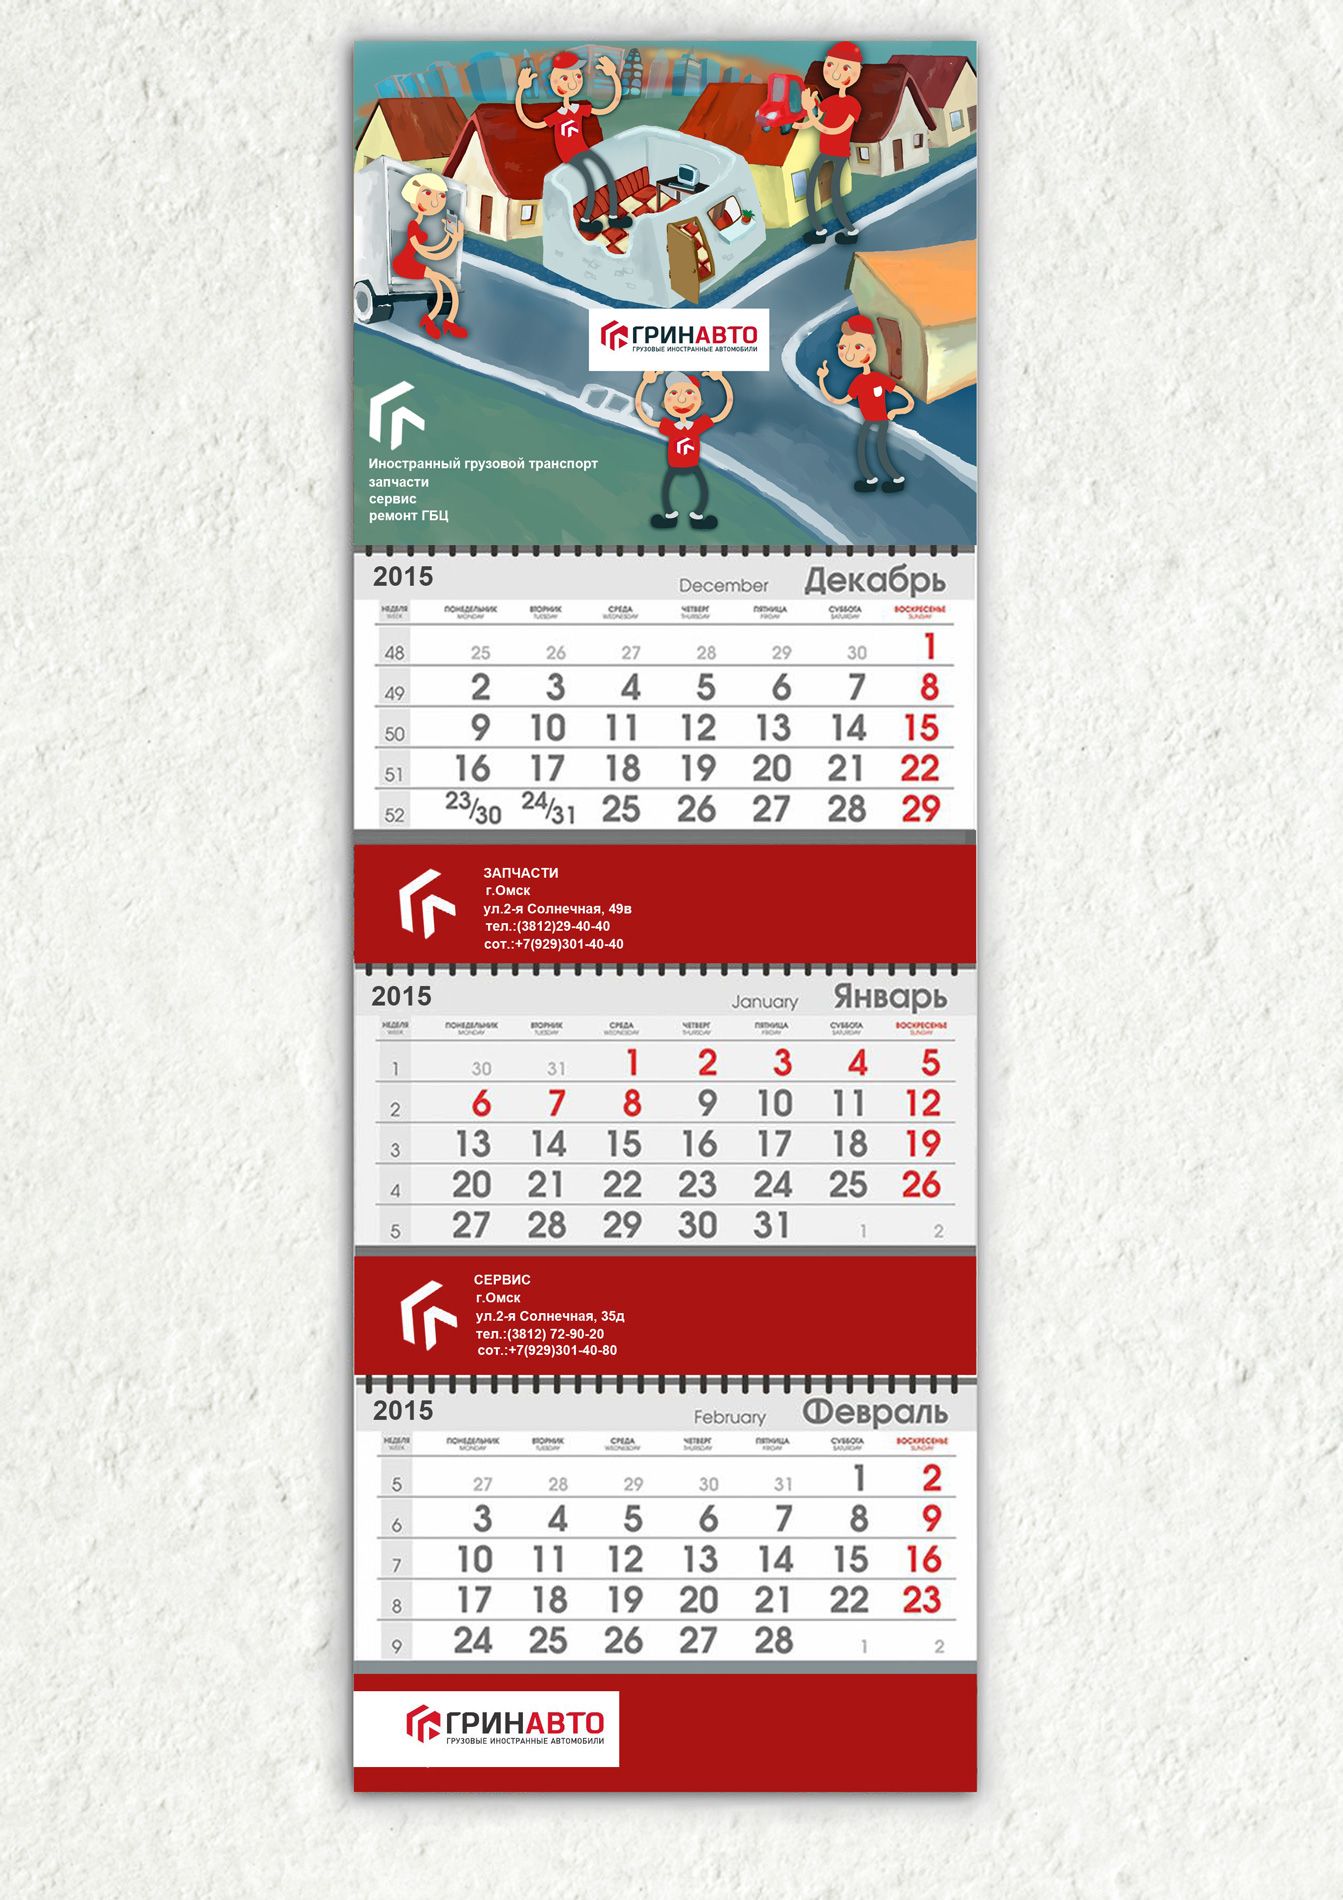 Иллюстрация для календаря, открытки - дизайнер Duck_in_Black